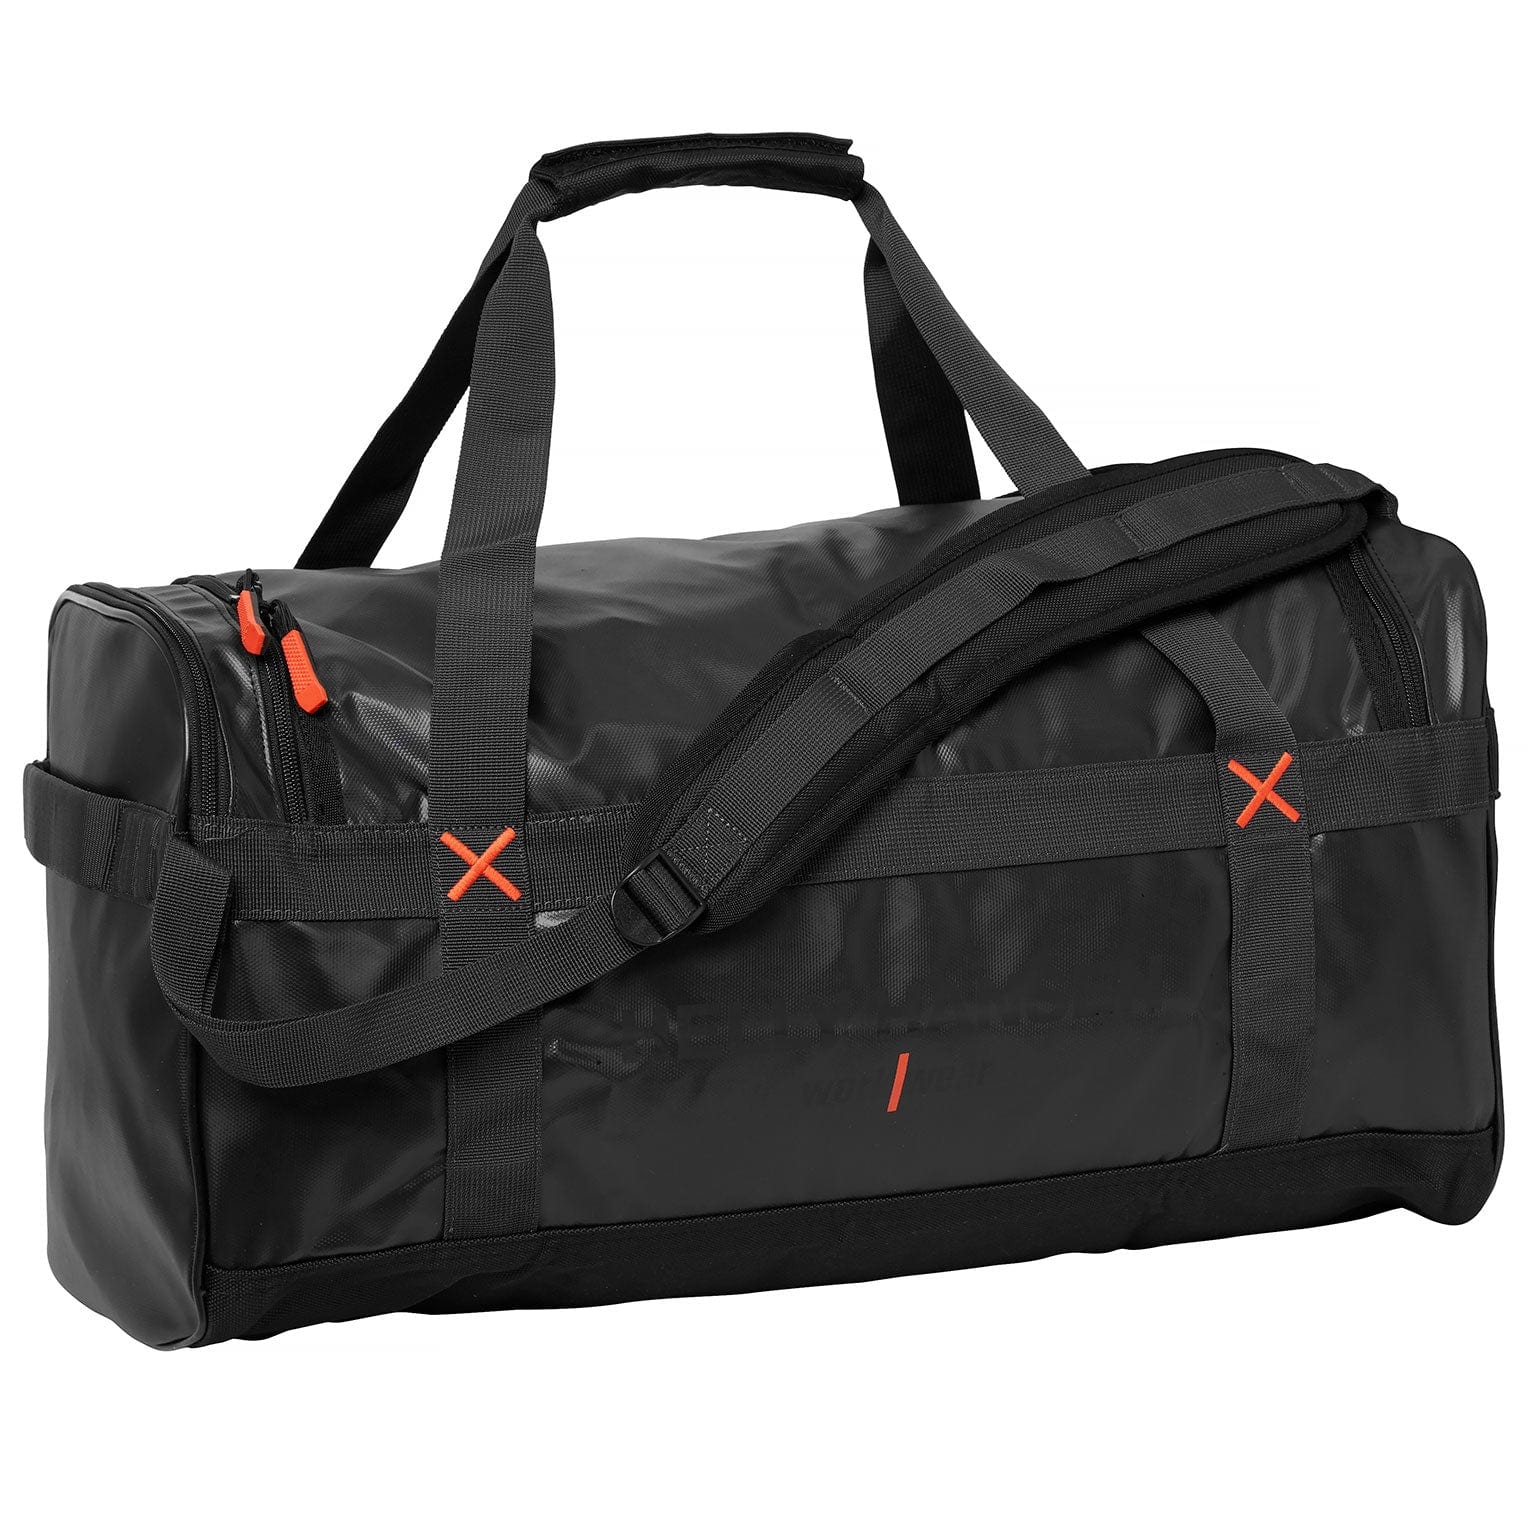 Helly Hansen Workwear Bags One Size / Black Helly Hansen Workwear - HH Duffel Bag 70L